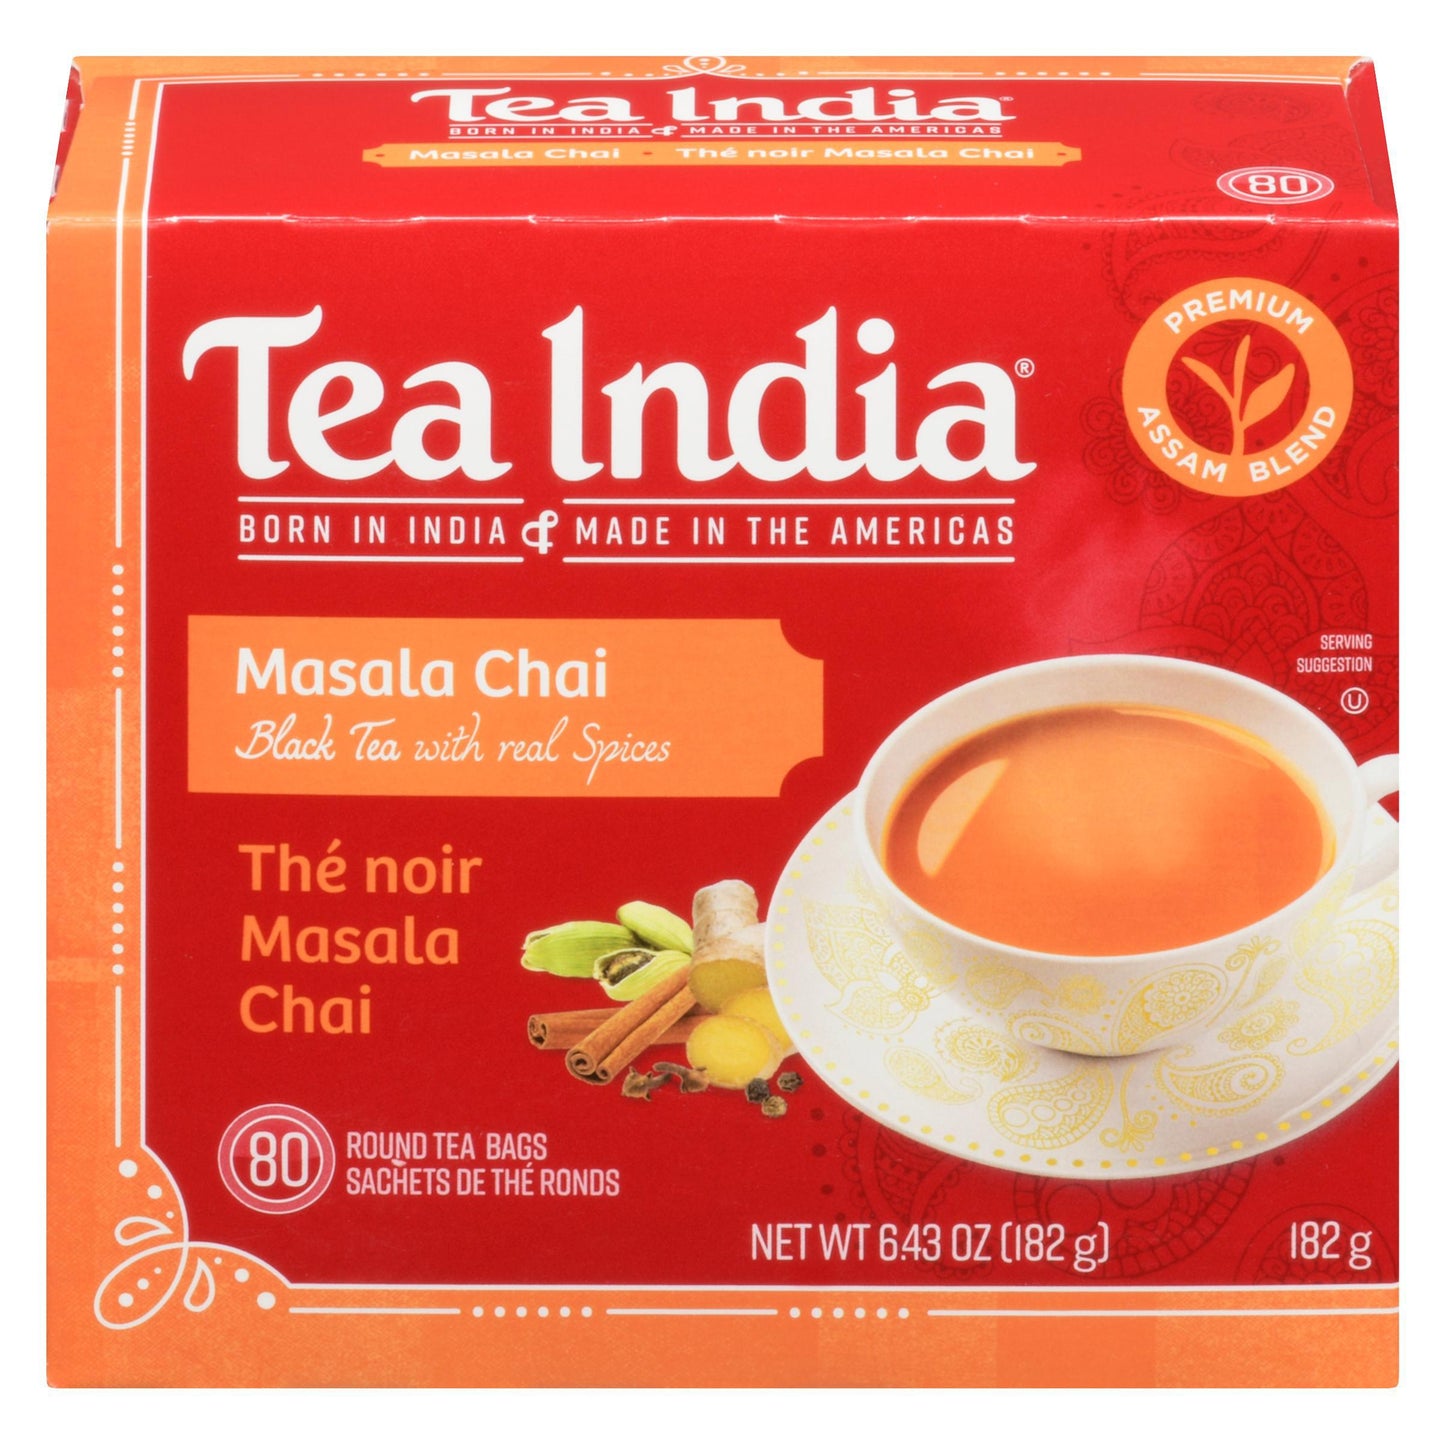 Tea India - Masala Chai-Black Tea with real spices(182g)